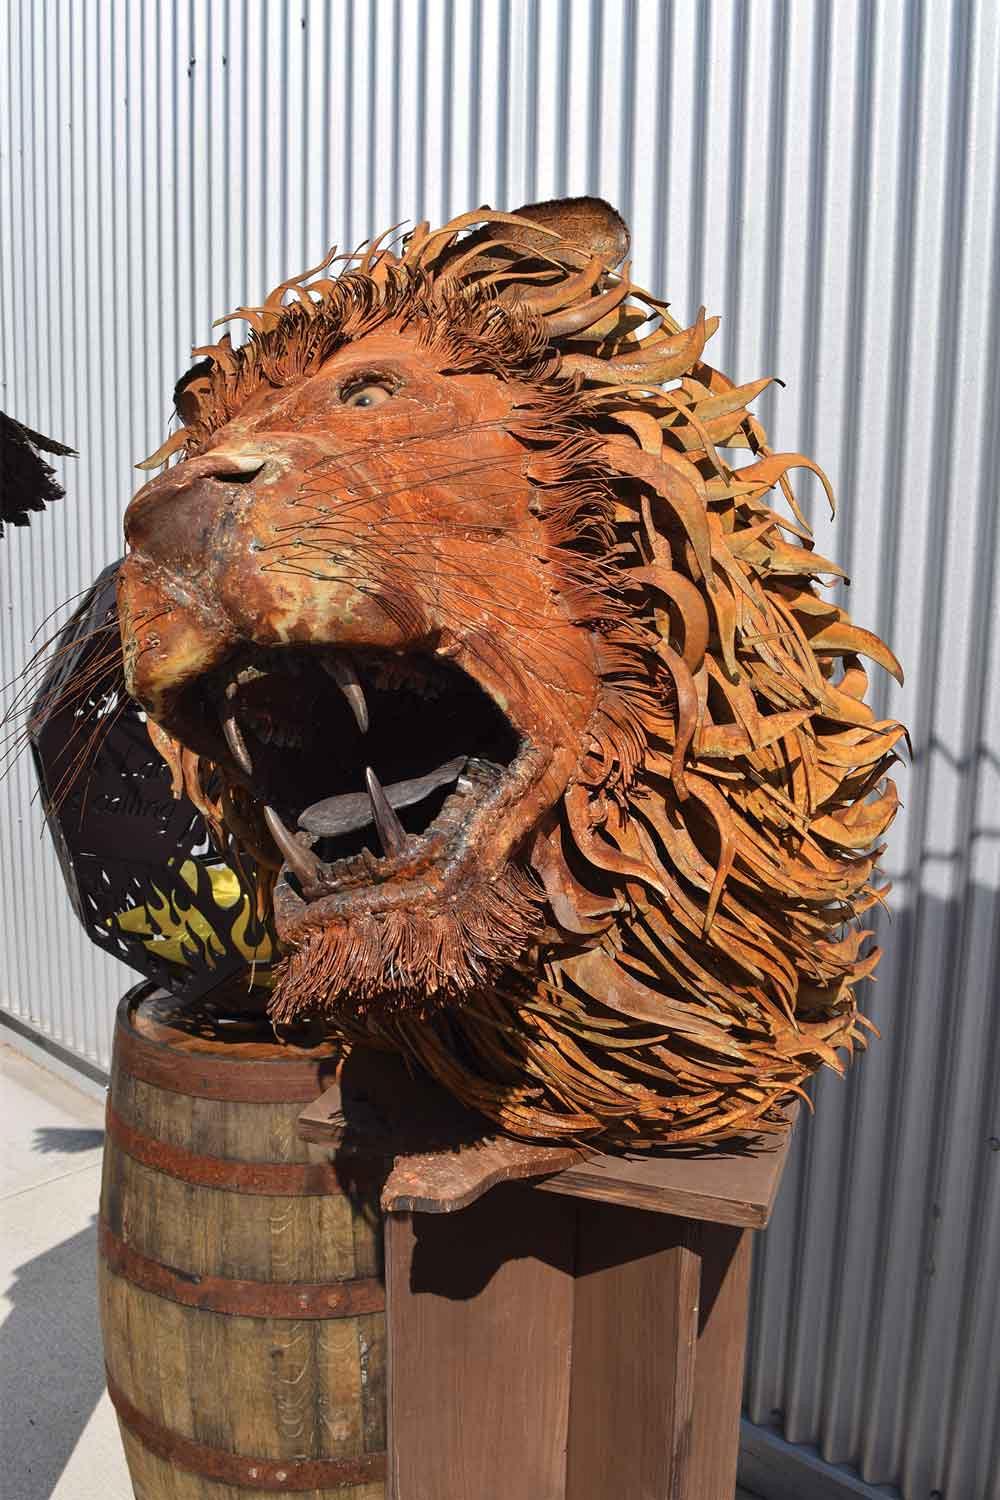 A lion's head sculpture on show at a recent Canadian Welding Association event.